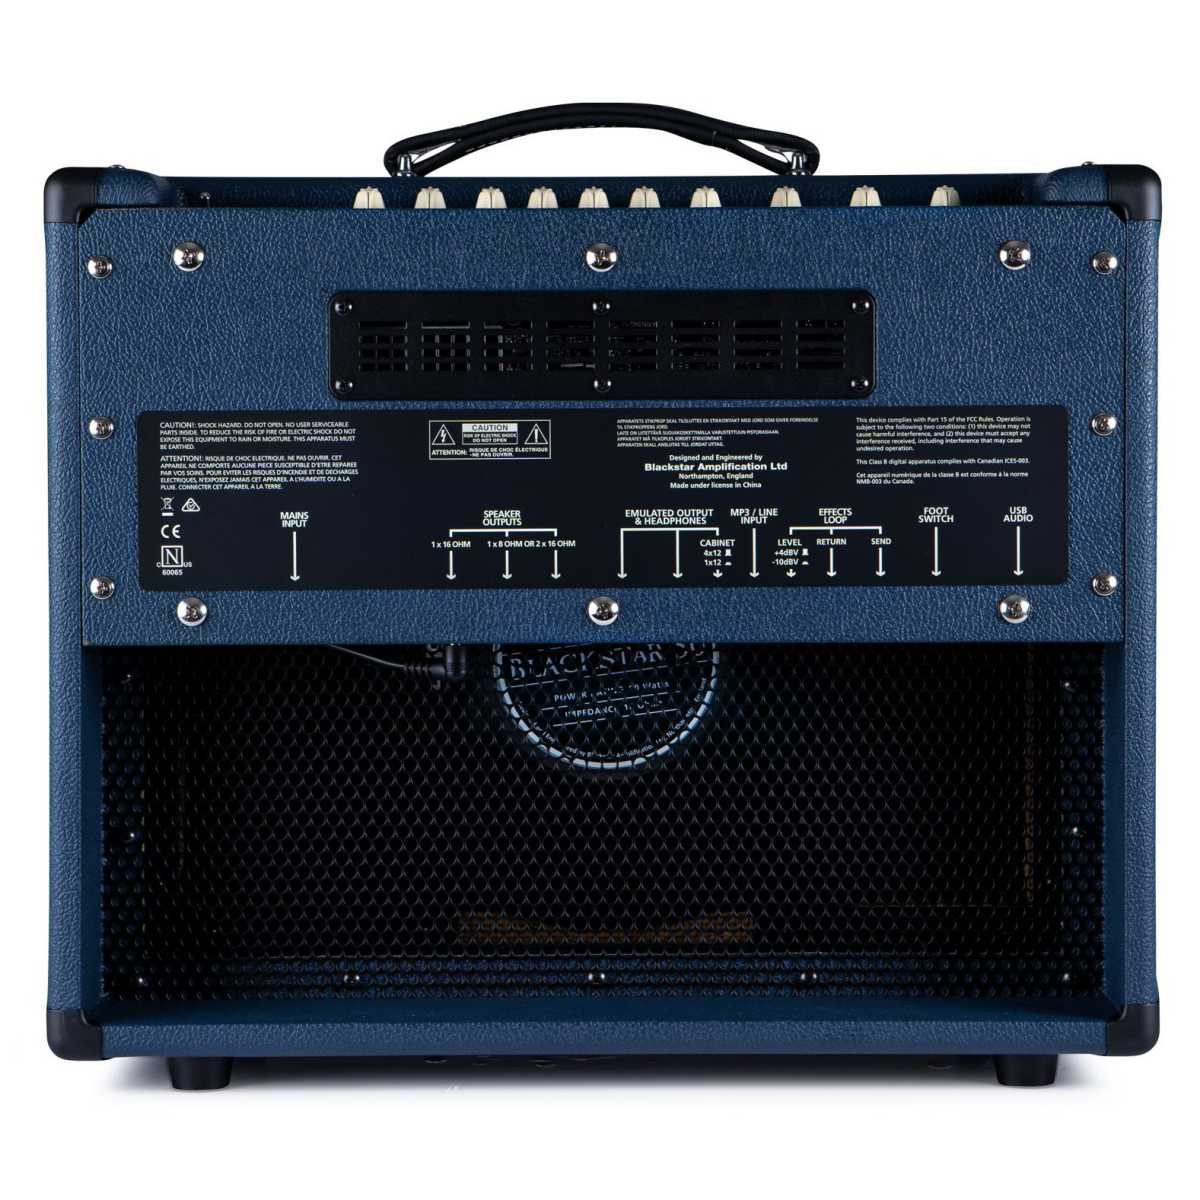 Blackstar Ht20r Mk2 20w 1x12 Trafalgar Blue - Combo amplificador para guitarra eléctrica - Variation 1